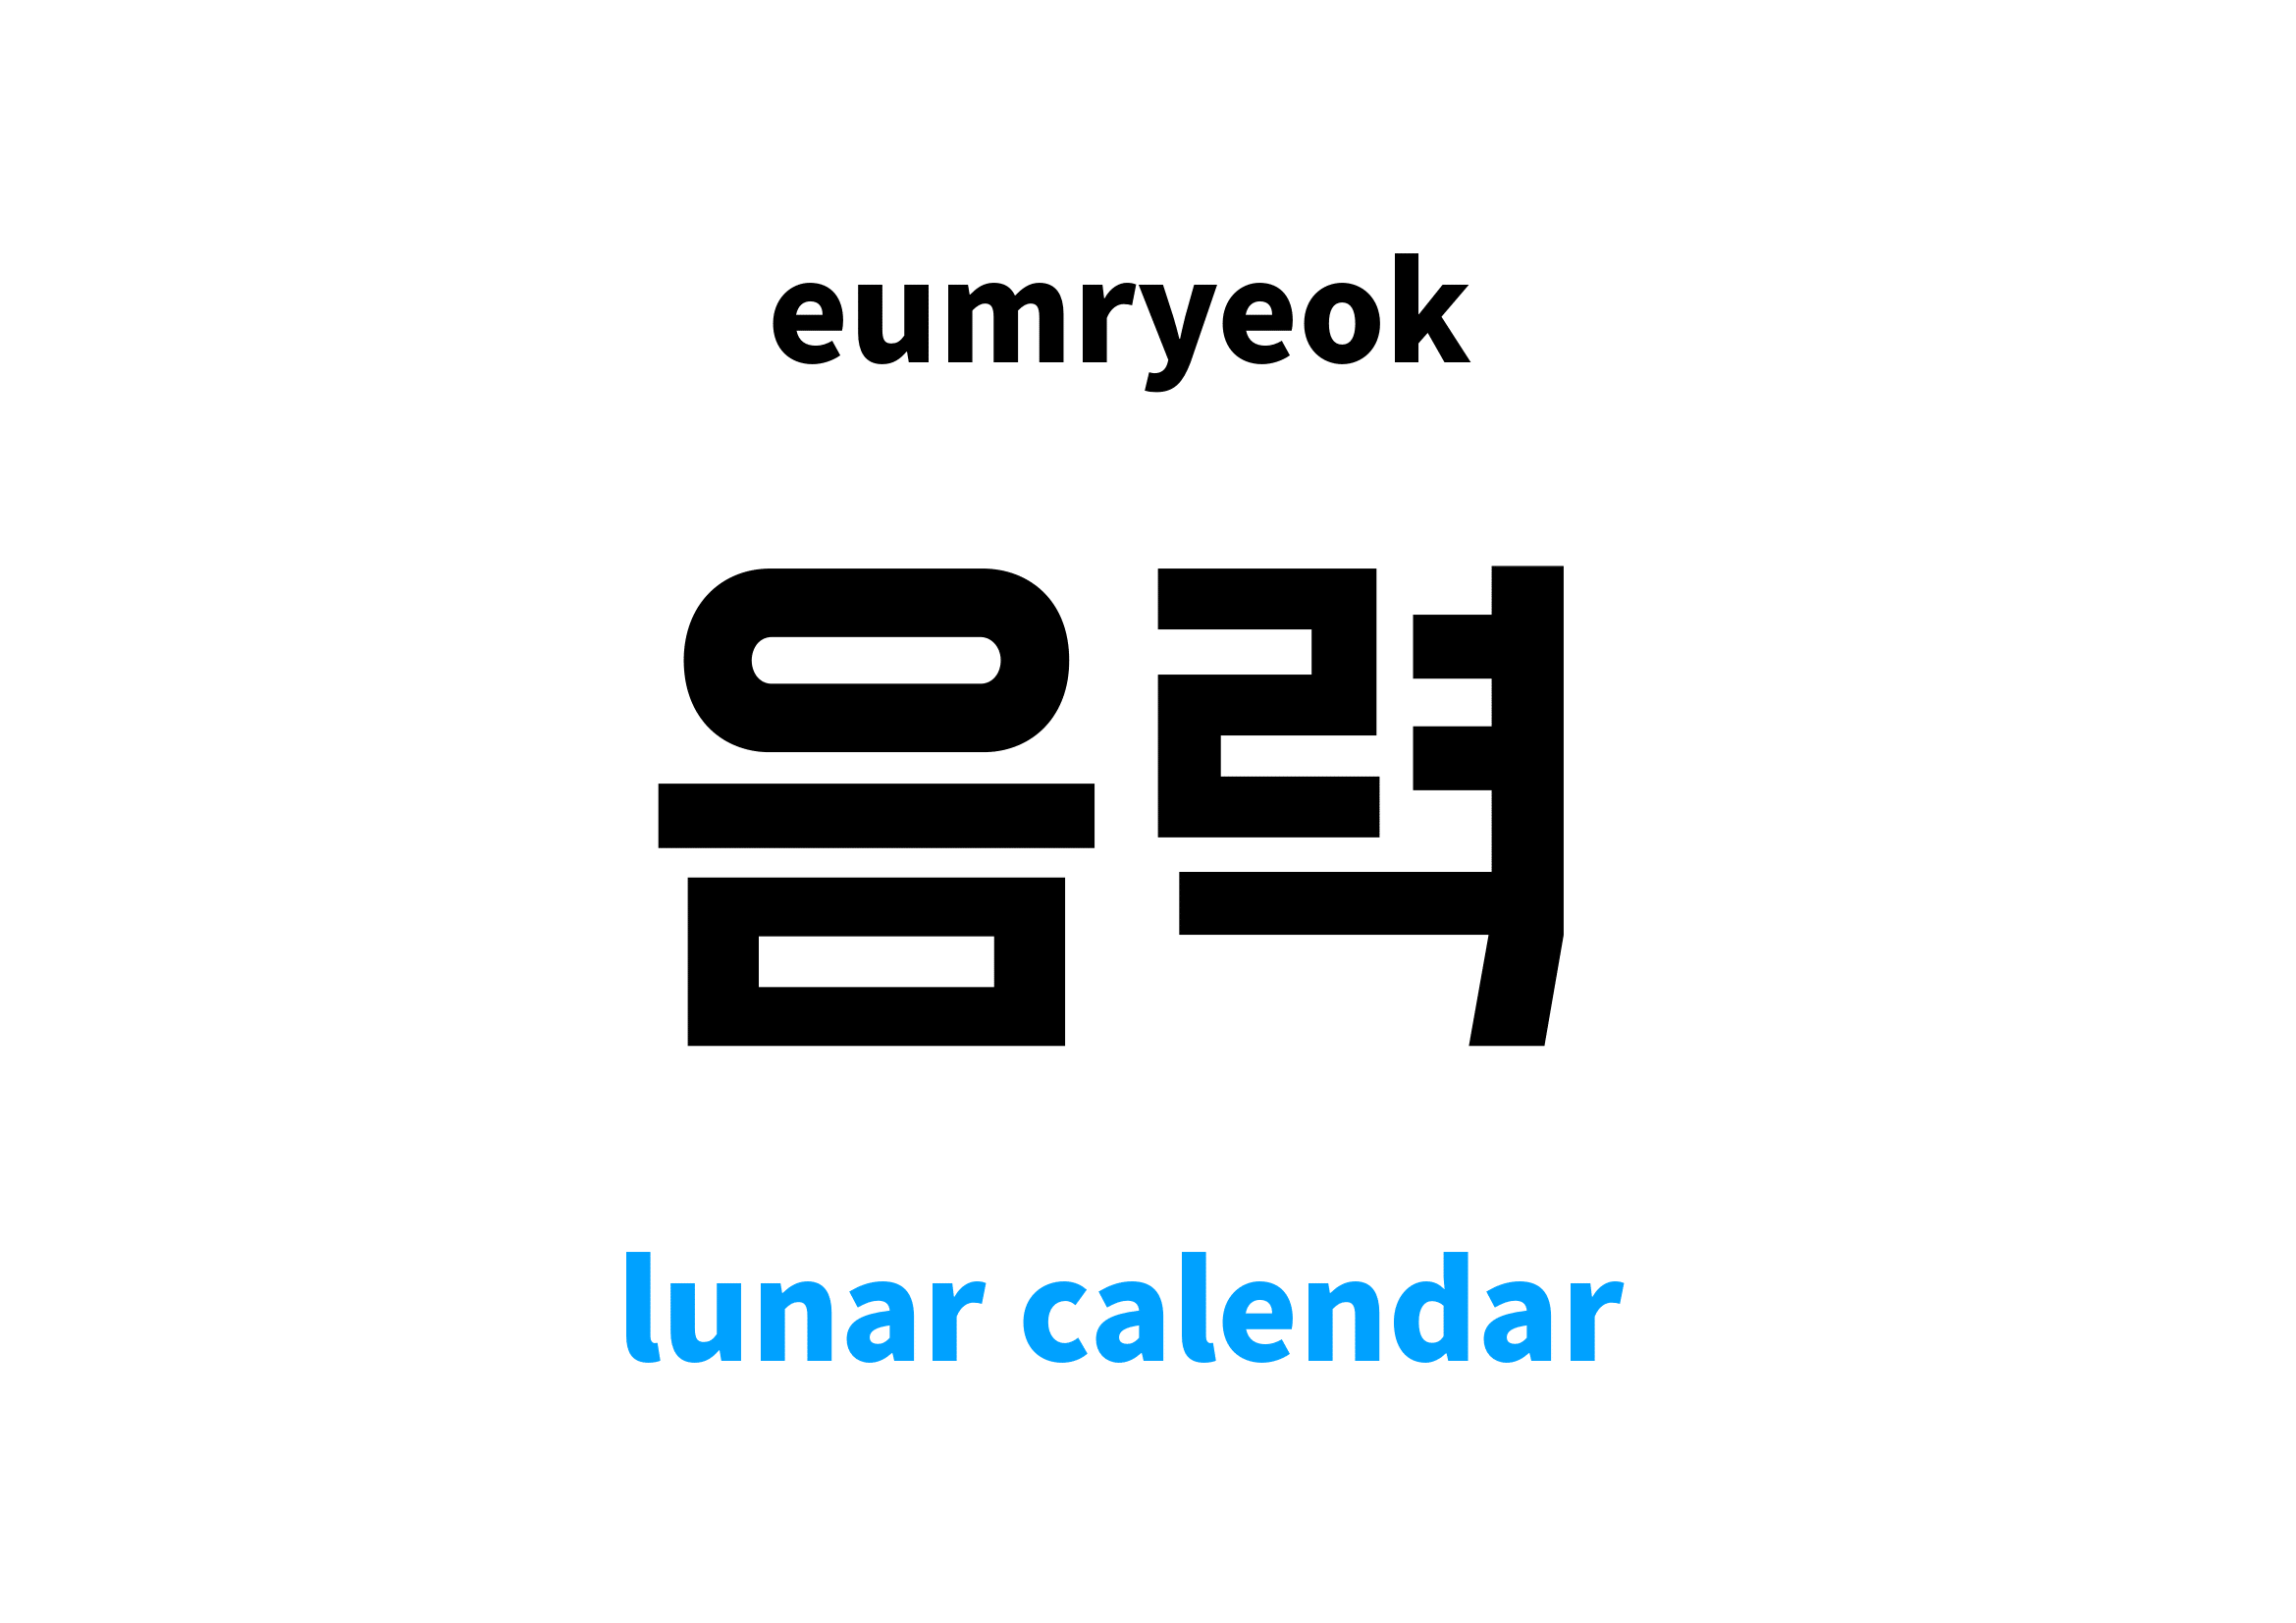 lunar calendar in Korean 음력's meaning and pronunciation